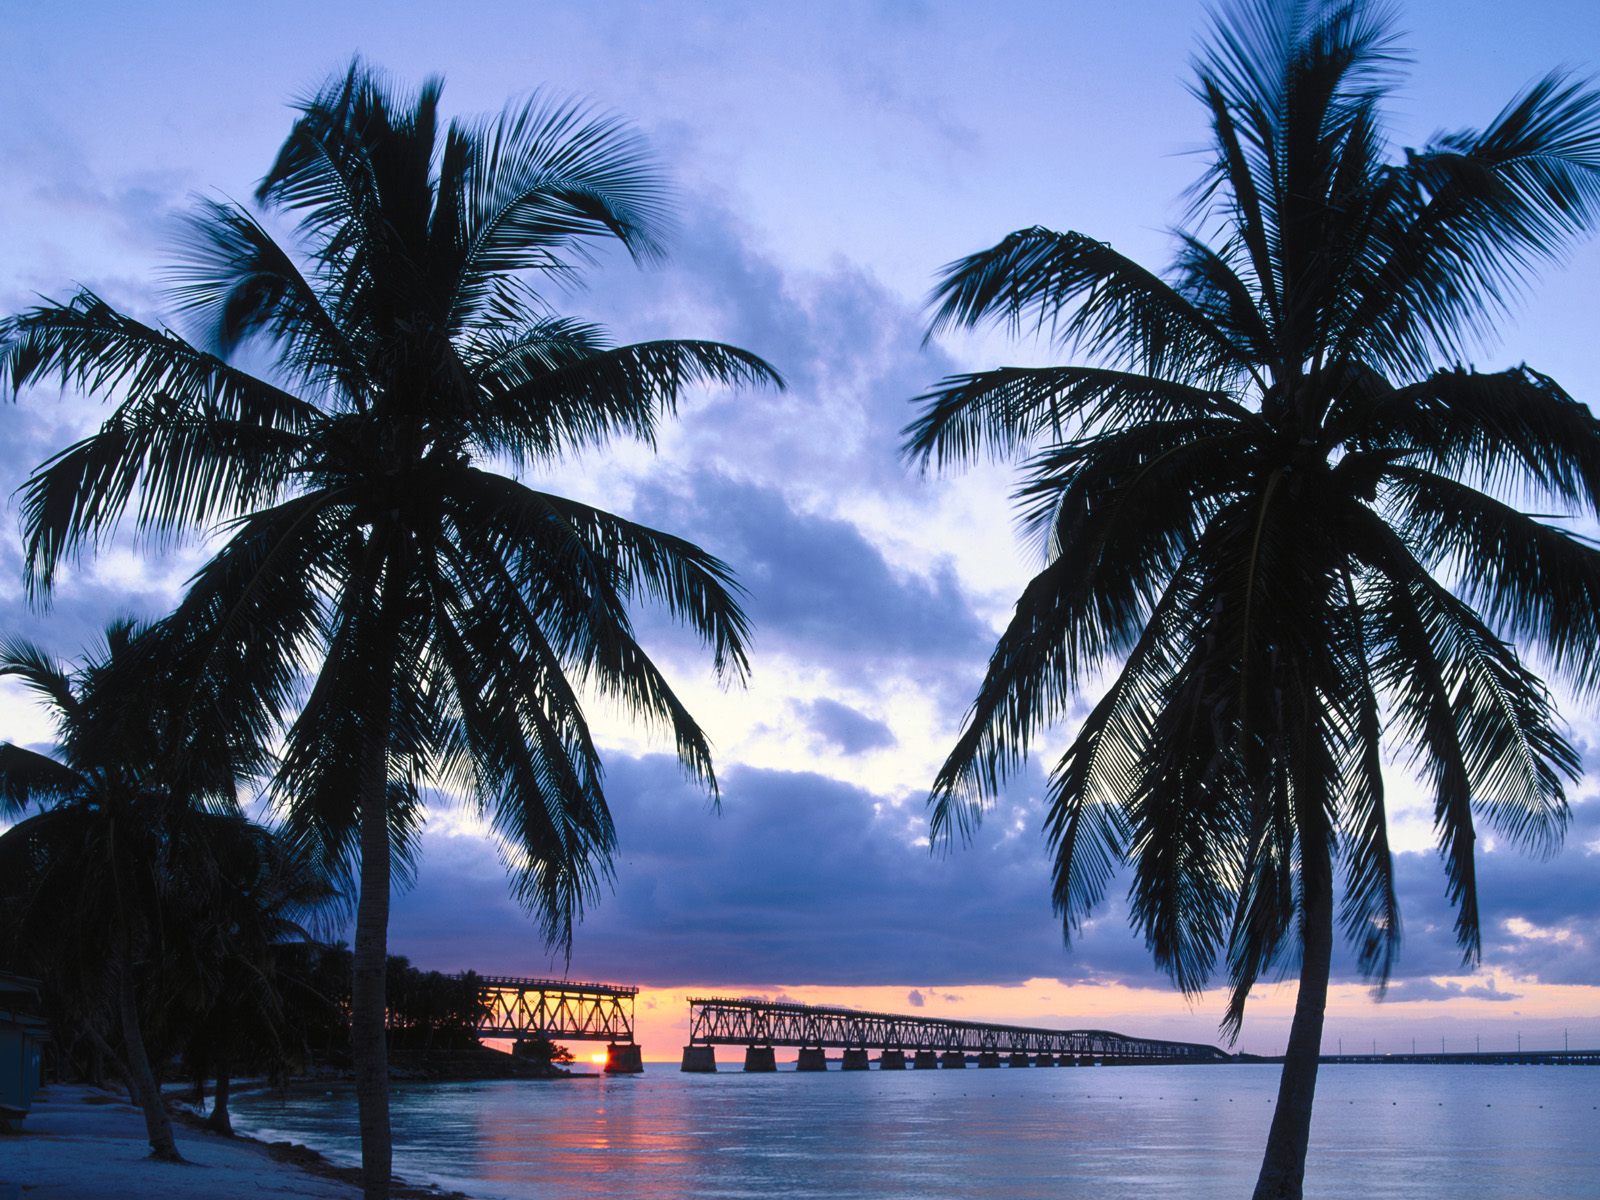  Florida Keys Bridges Roads Photography Desktop Wallpapers